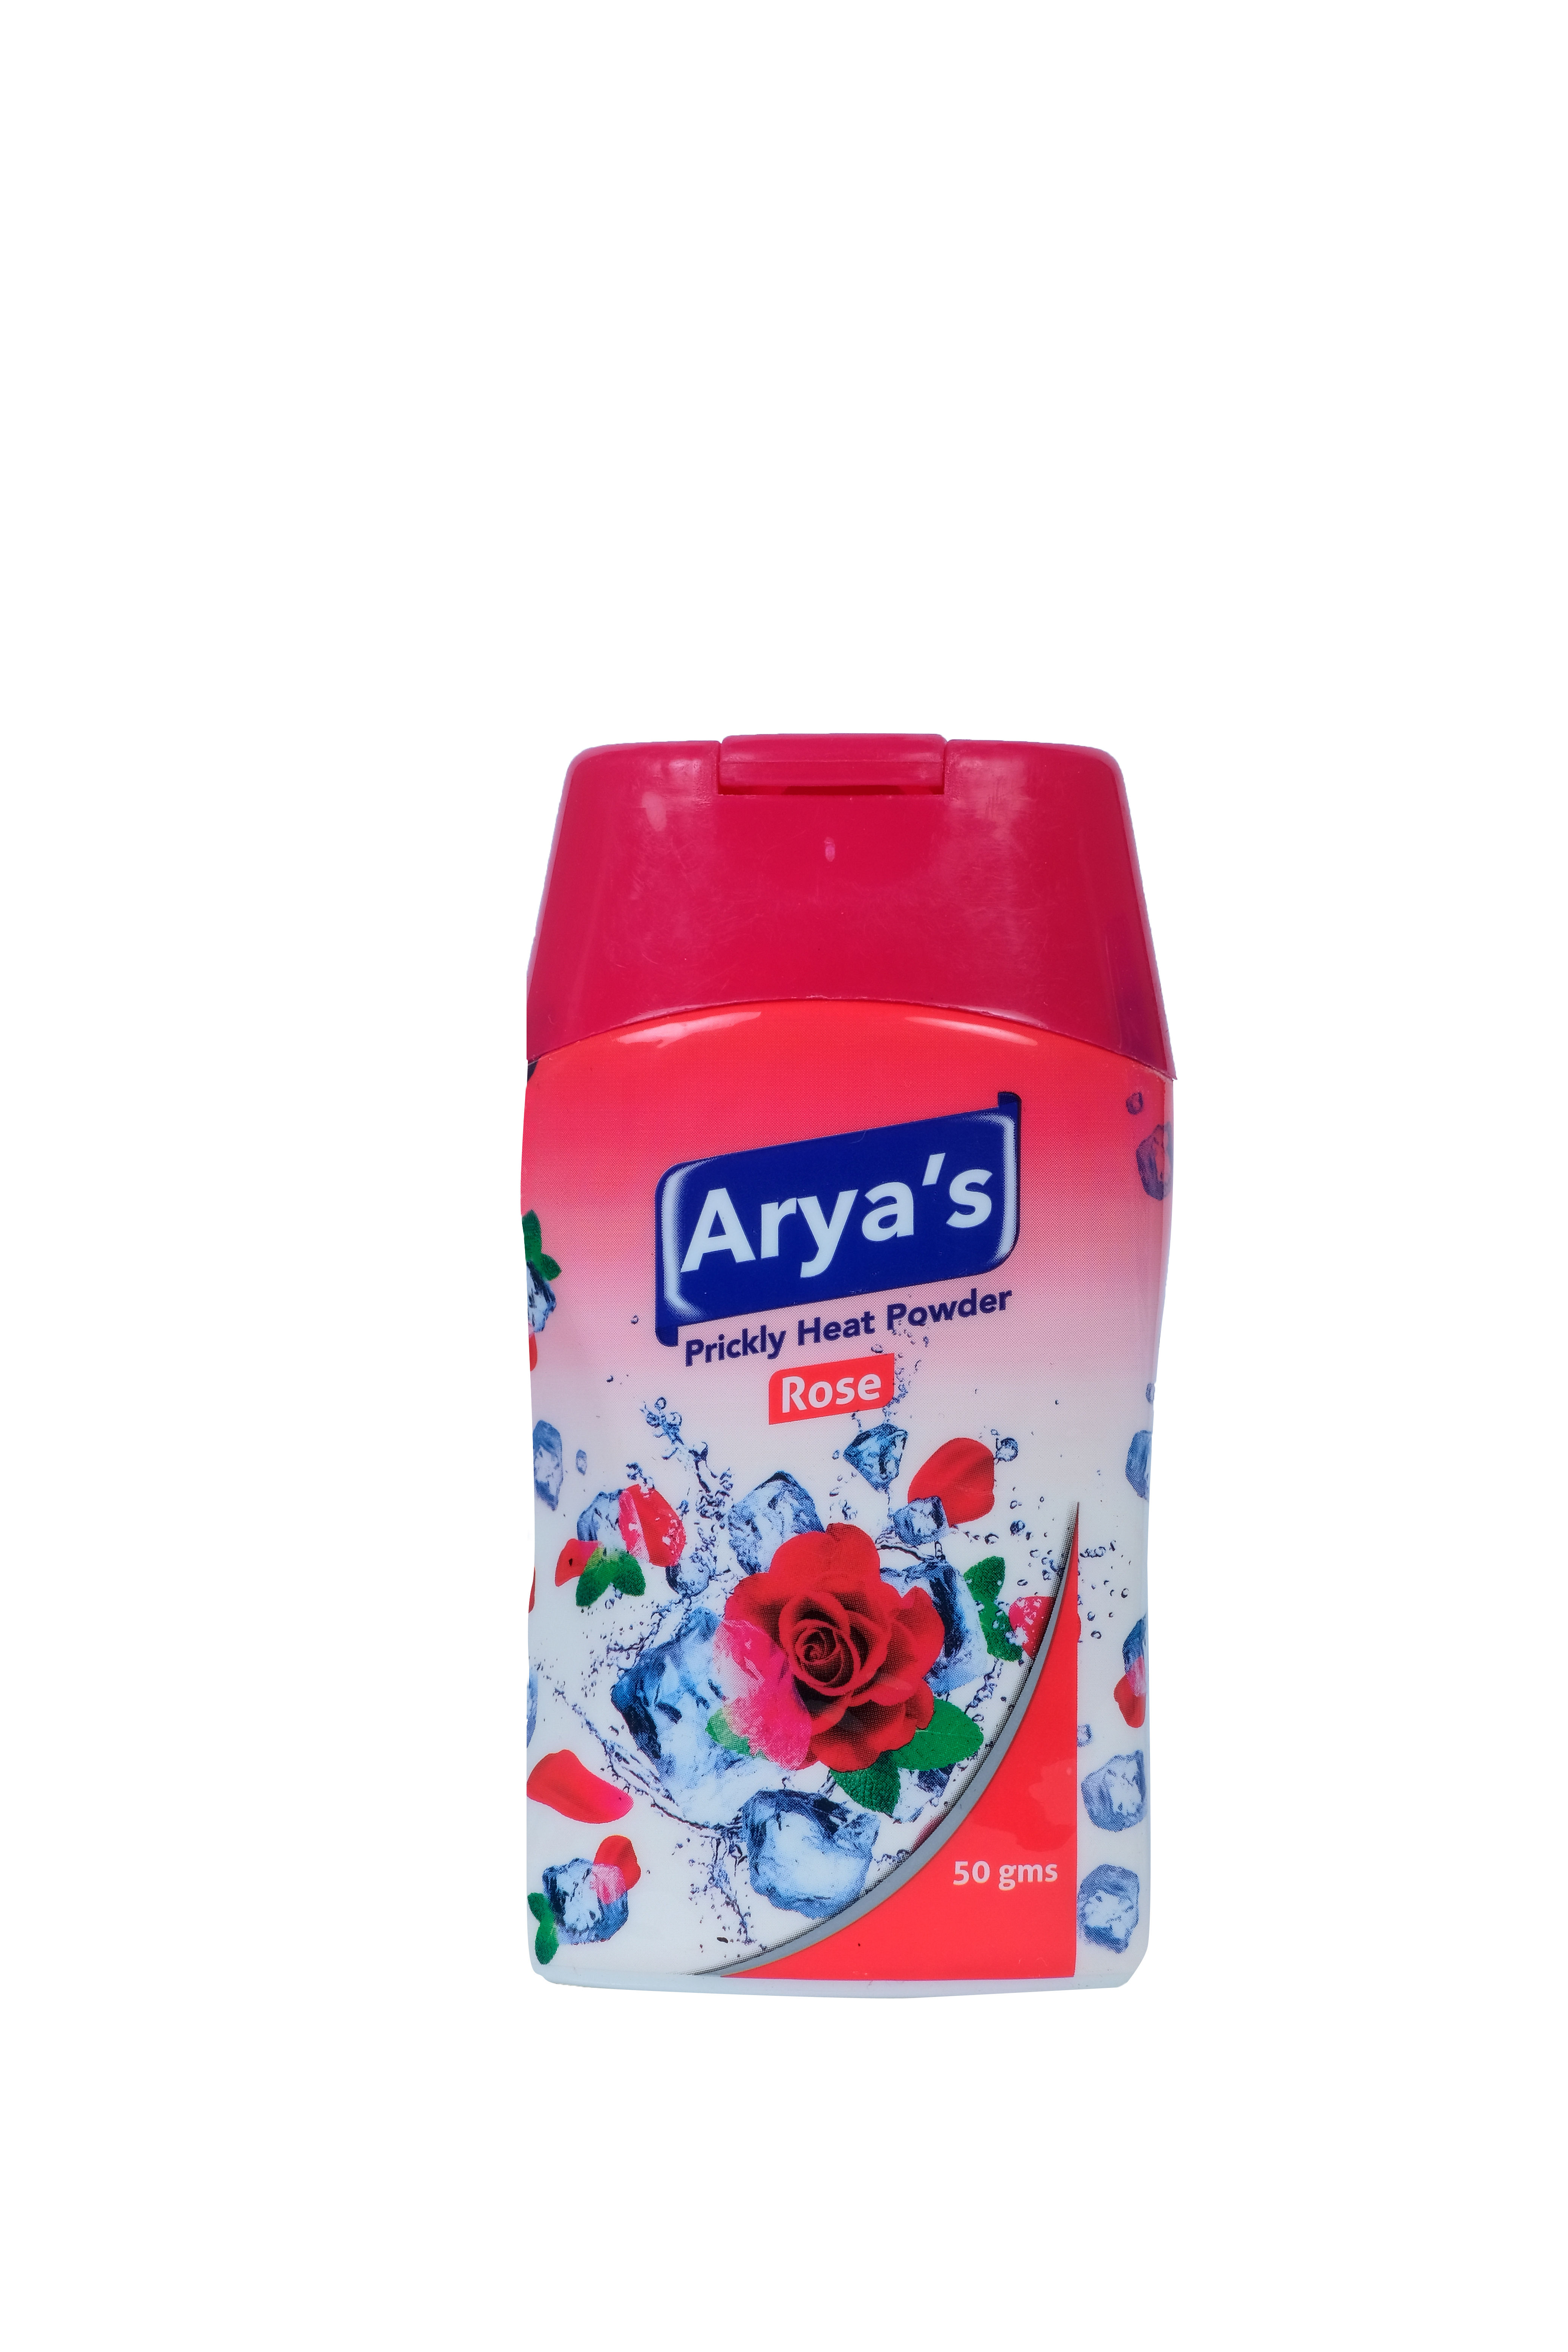 Arya Prickly Heat Powder